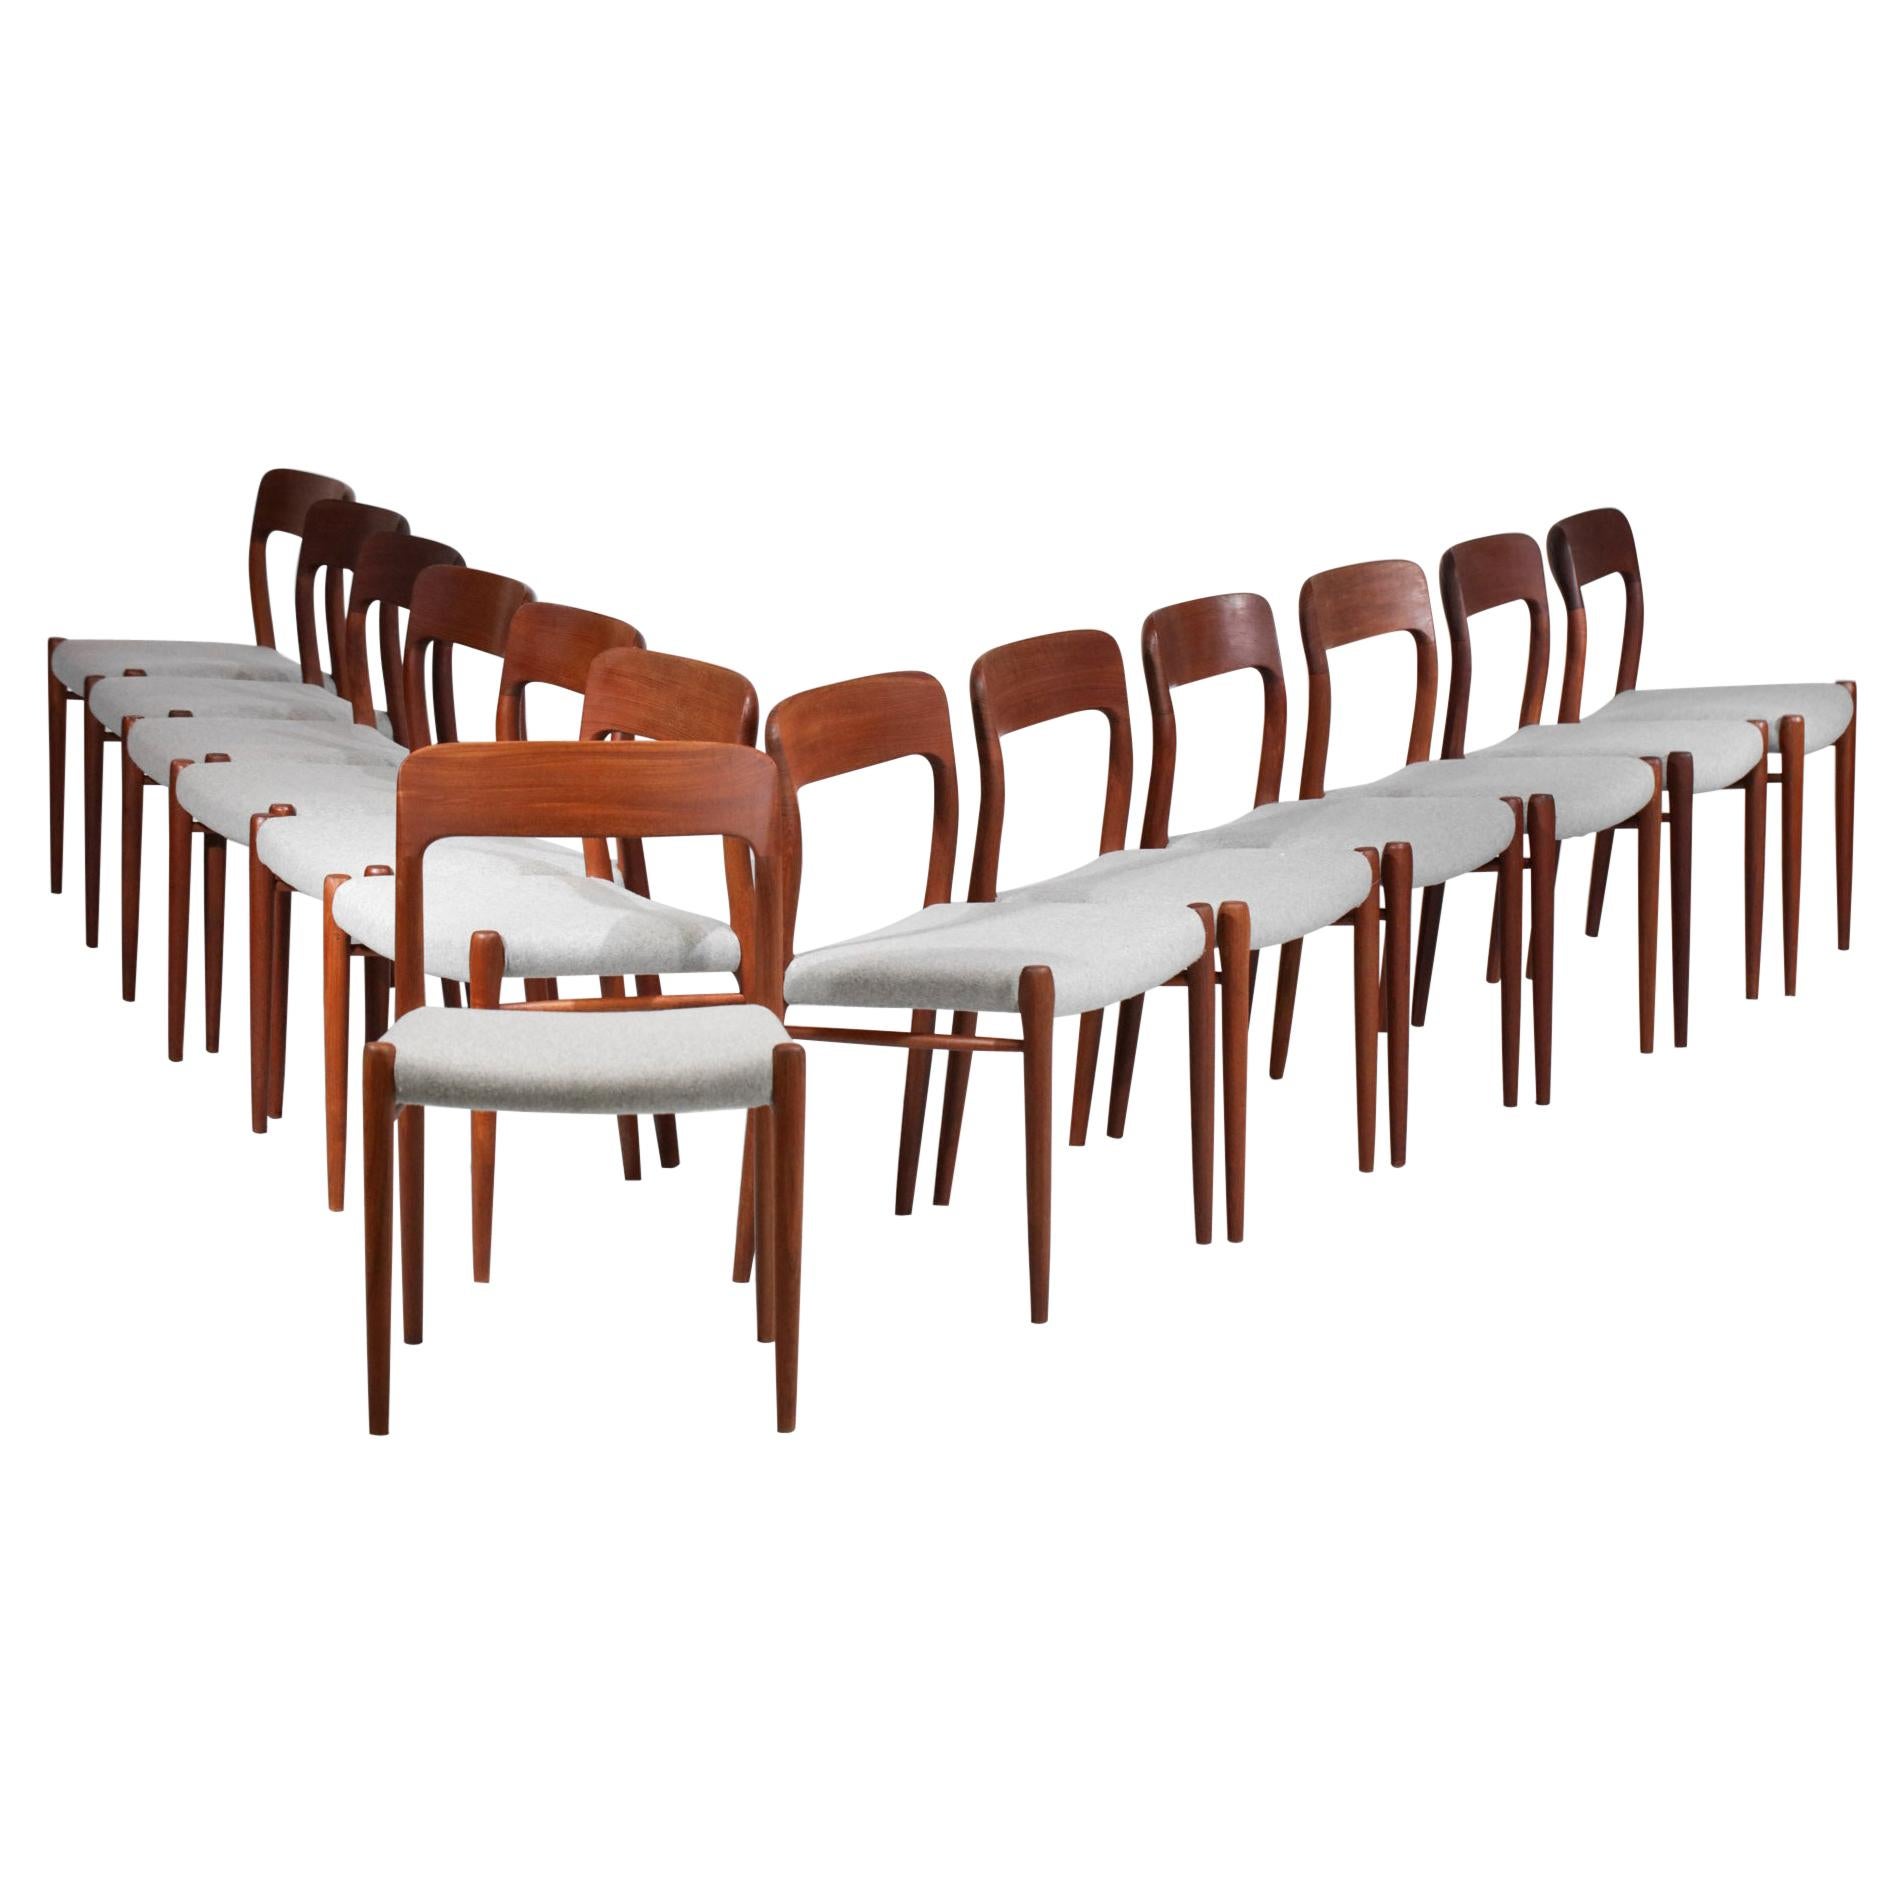 Set of 13 Scandinavian Teak Chairs by Danish Designer Niels Otto Moller B17-E542